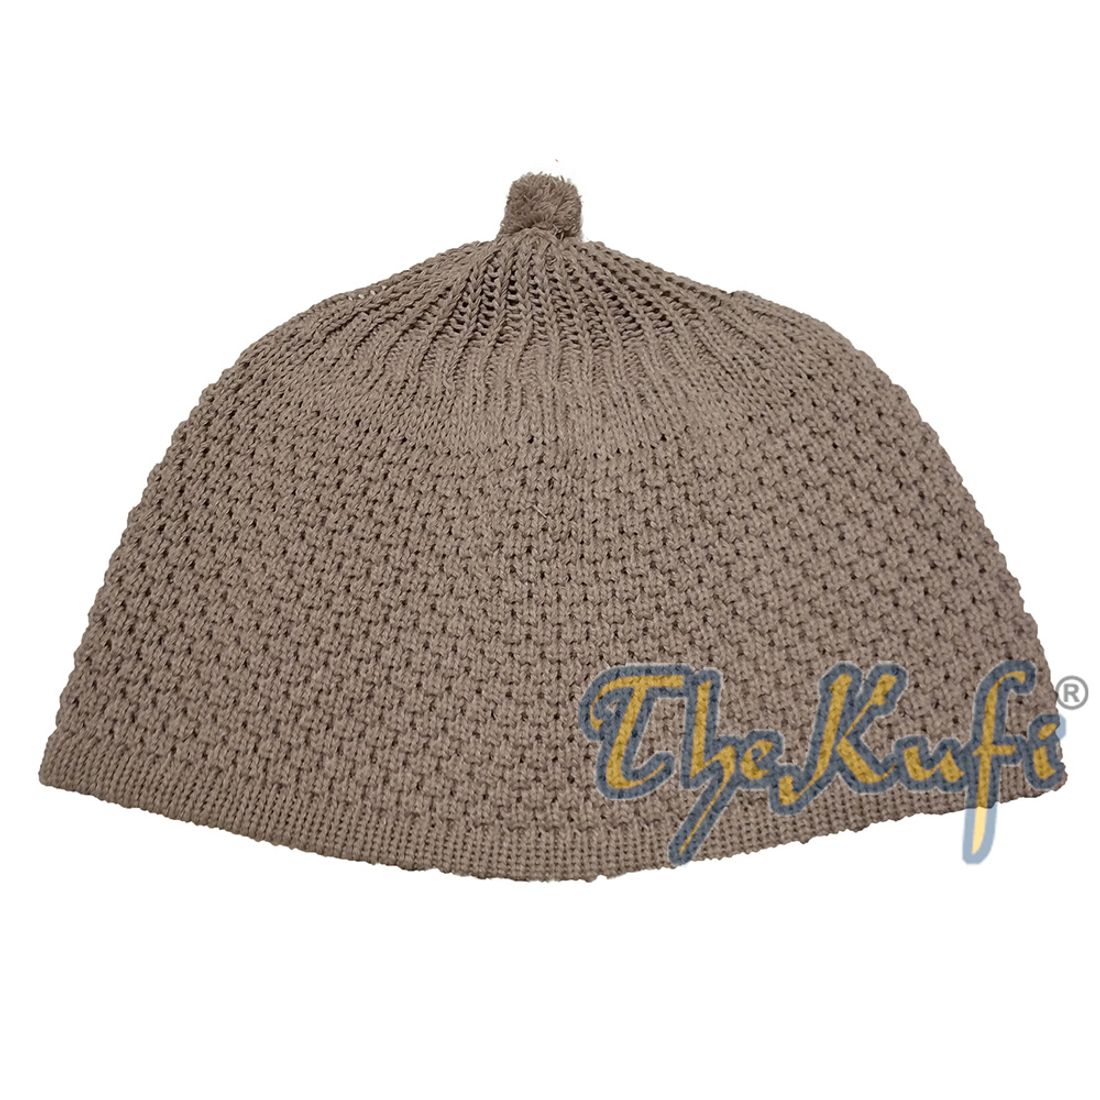 Light Beige Turkish-style Knit Stretchy Warm Beanie Hat